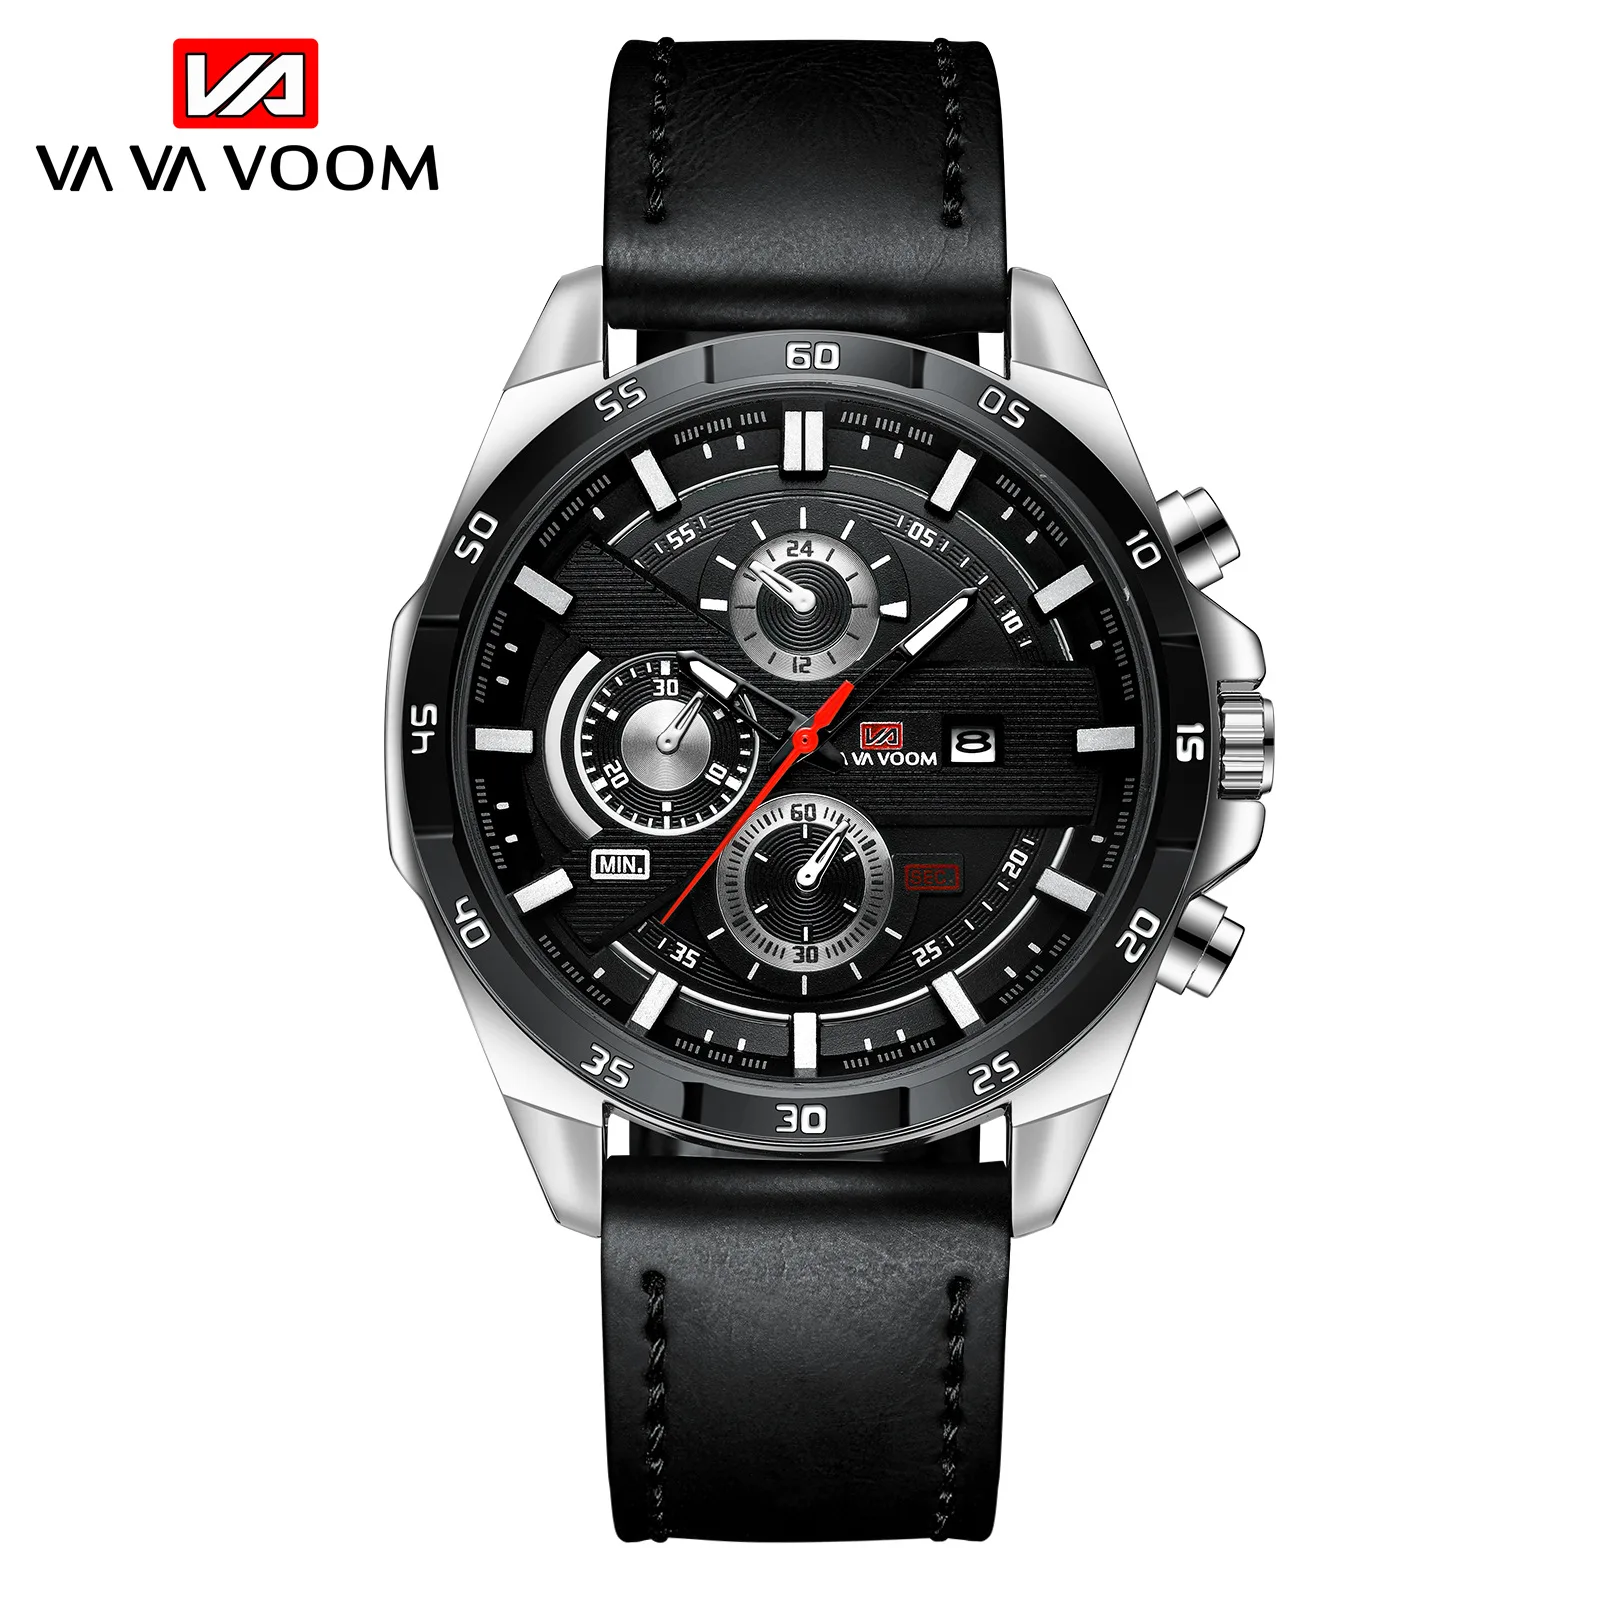 
New Men Watches Calendar Leather Strap Quartz Watch Waterproof Casual Business Wrist Watch for Men 2020 